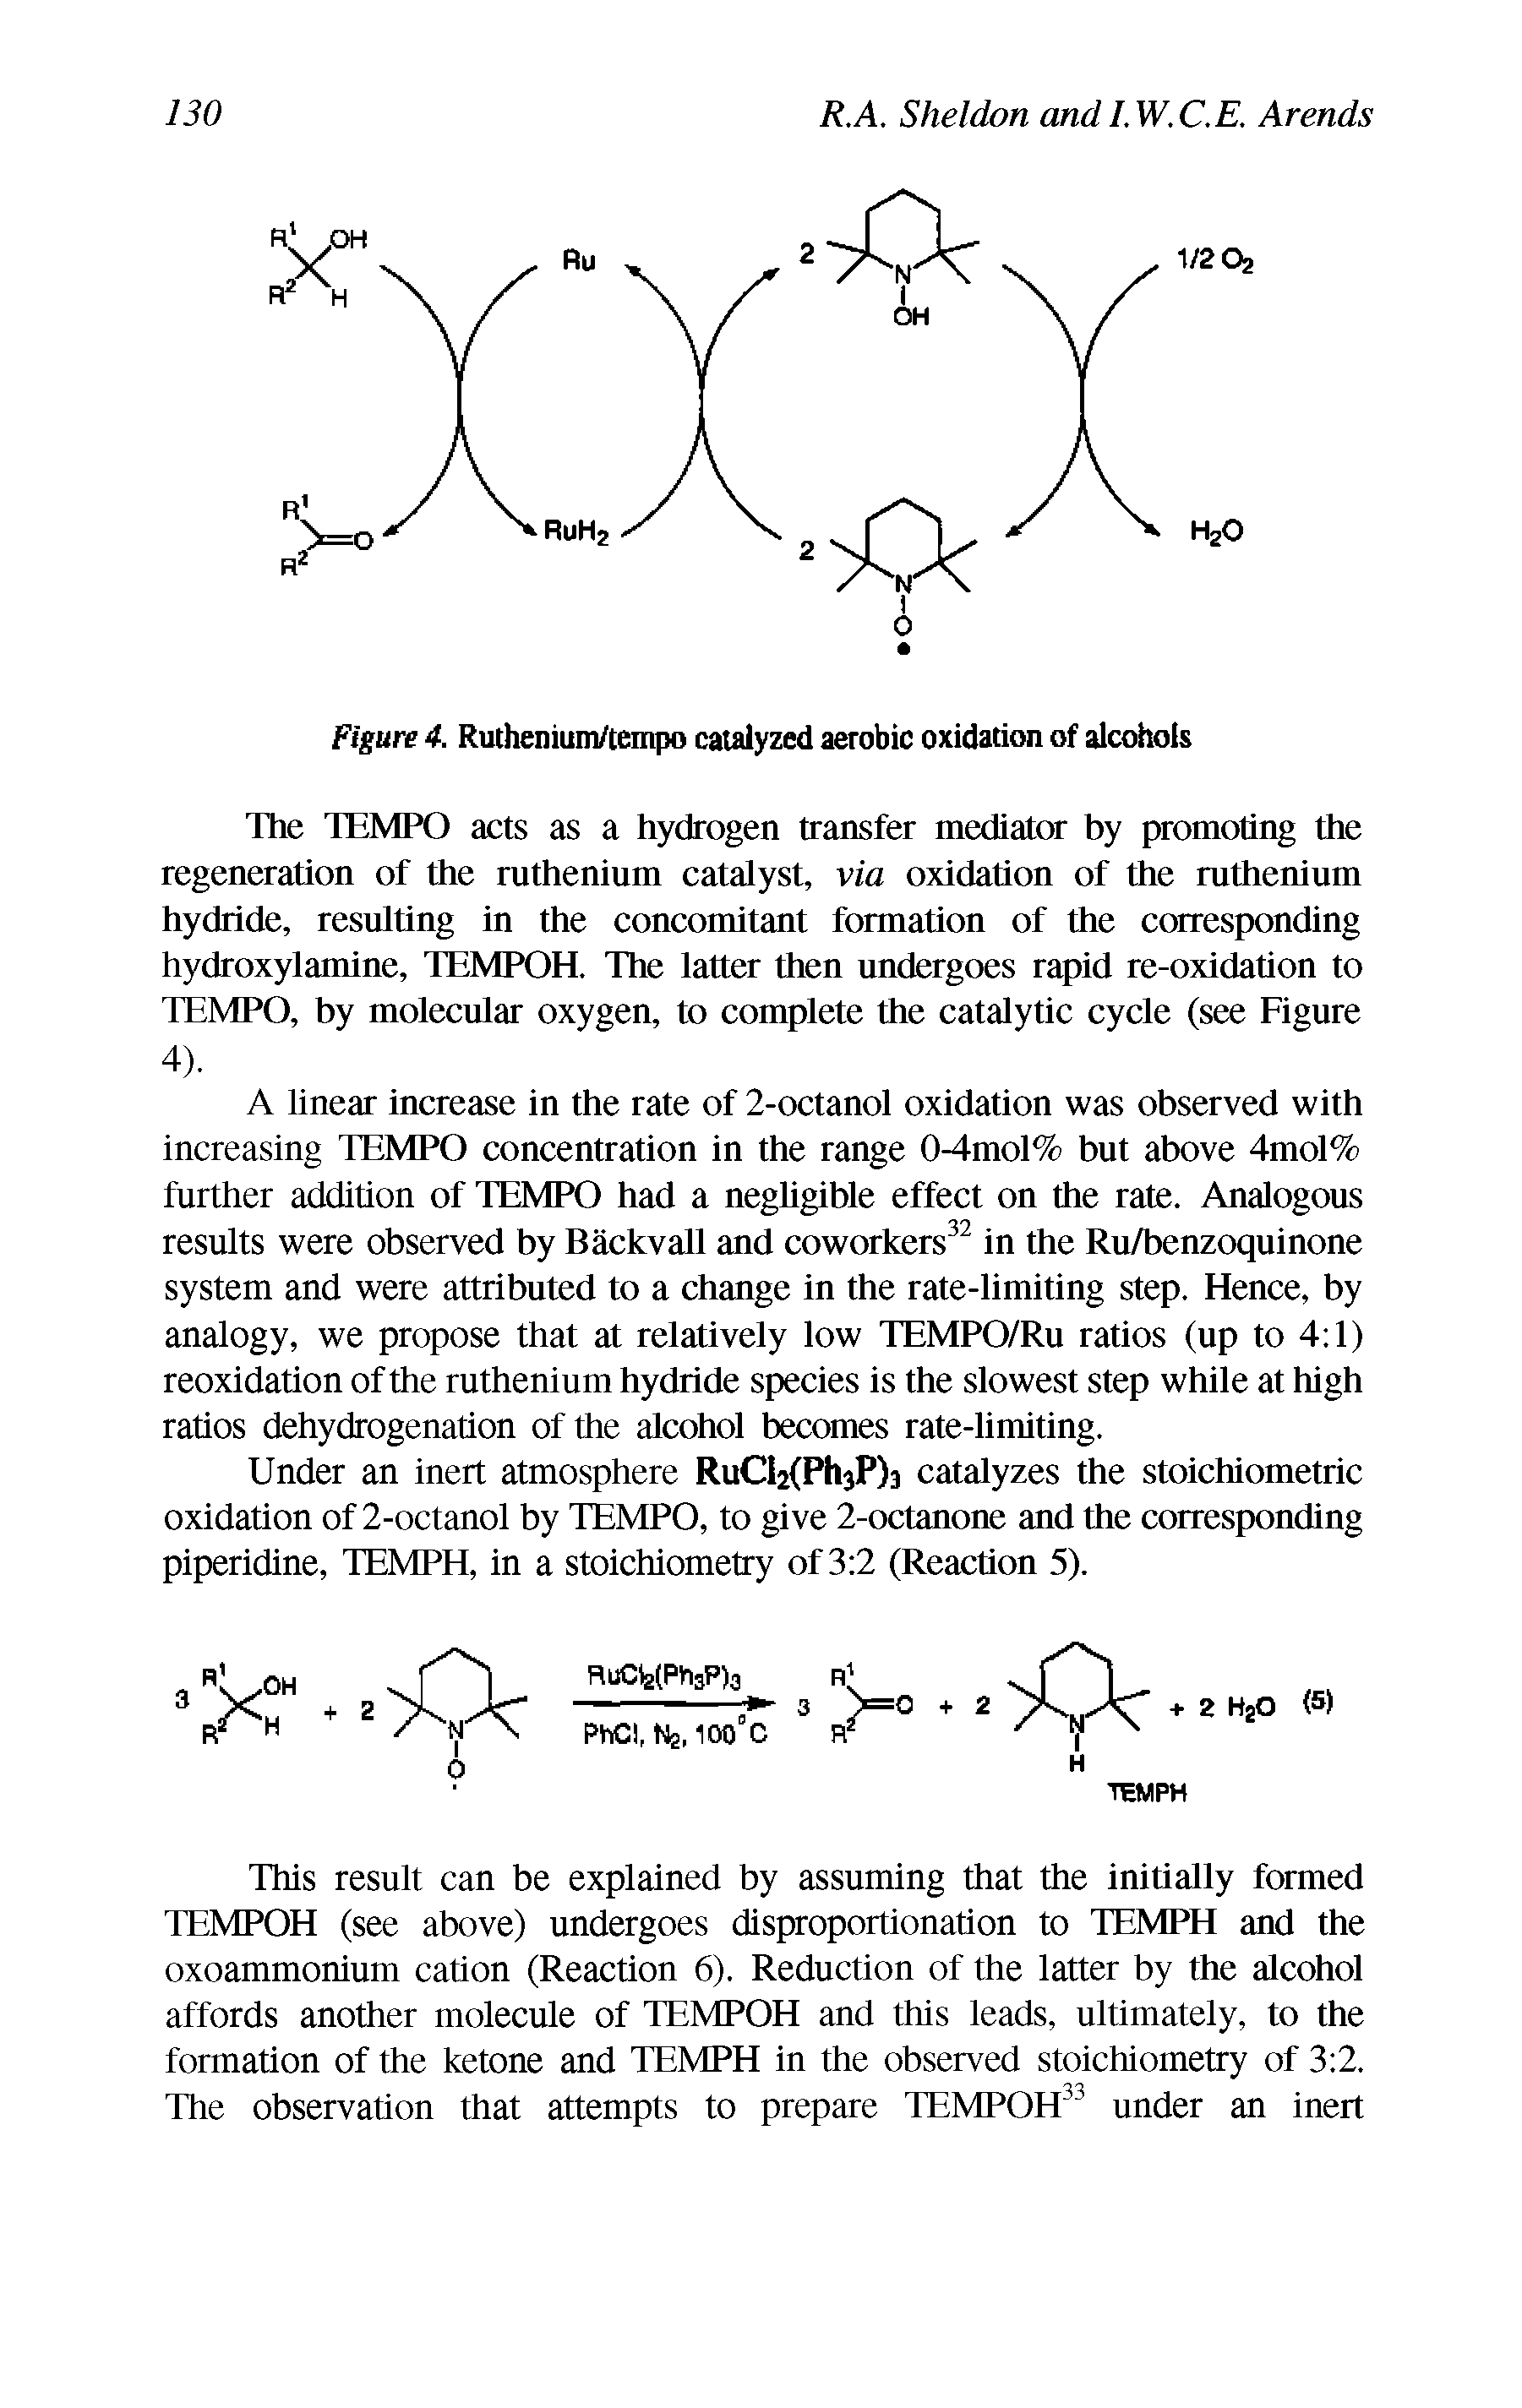 Figure 4. Ruthenium/tempo catalyzed aerobic oxidation of alcdtols...